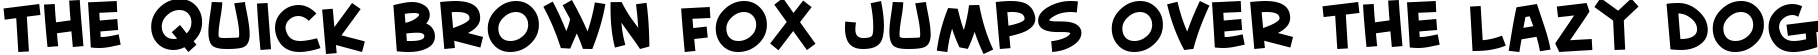 Пример написания шрифтом Bold текста на английском